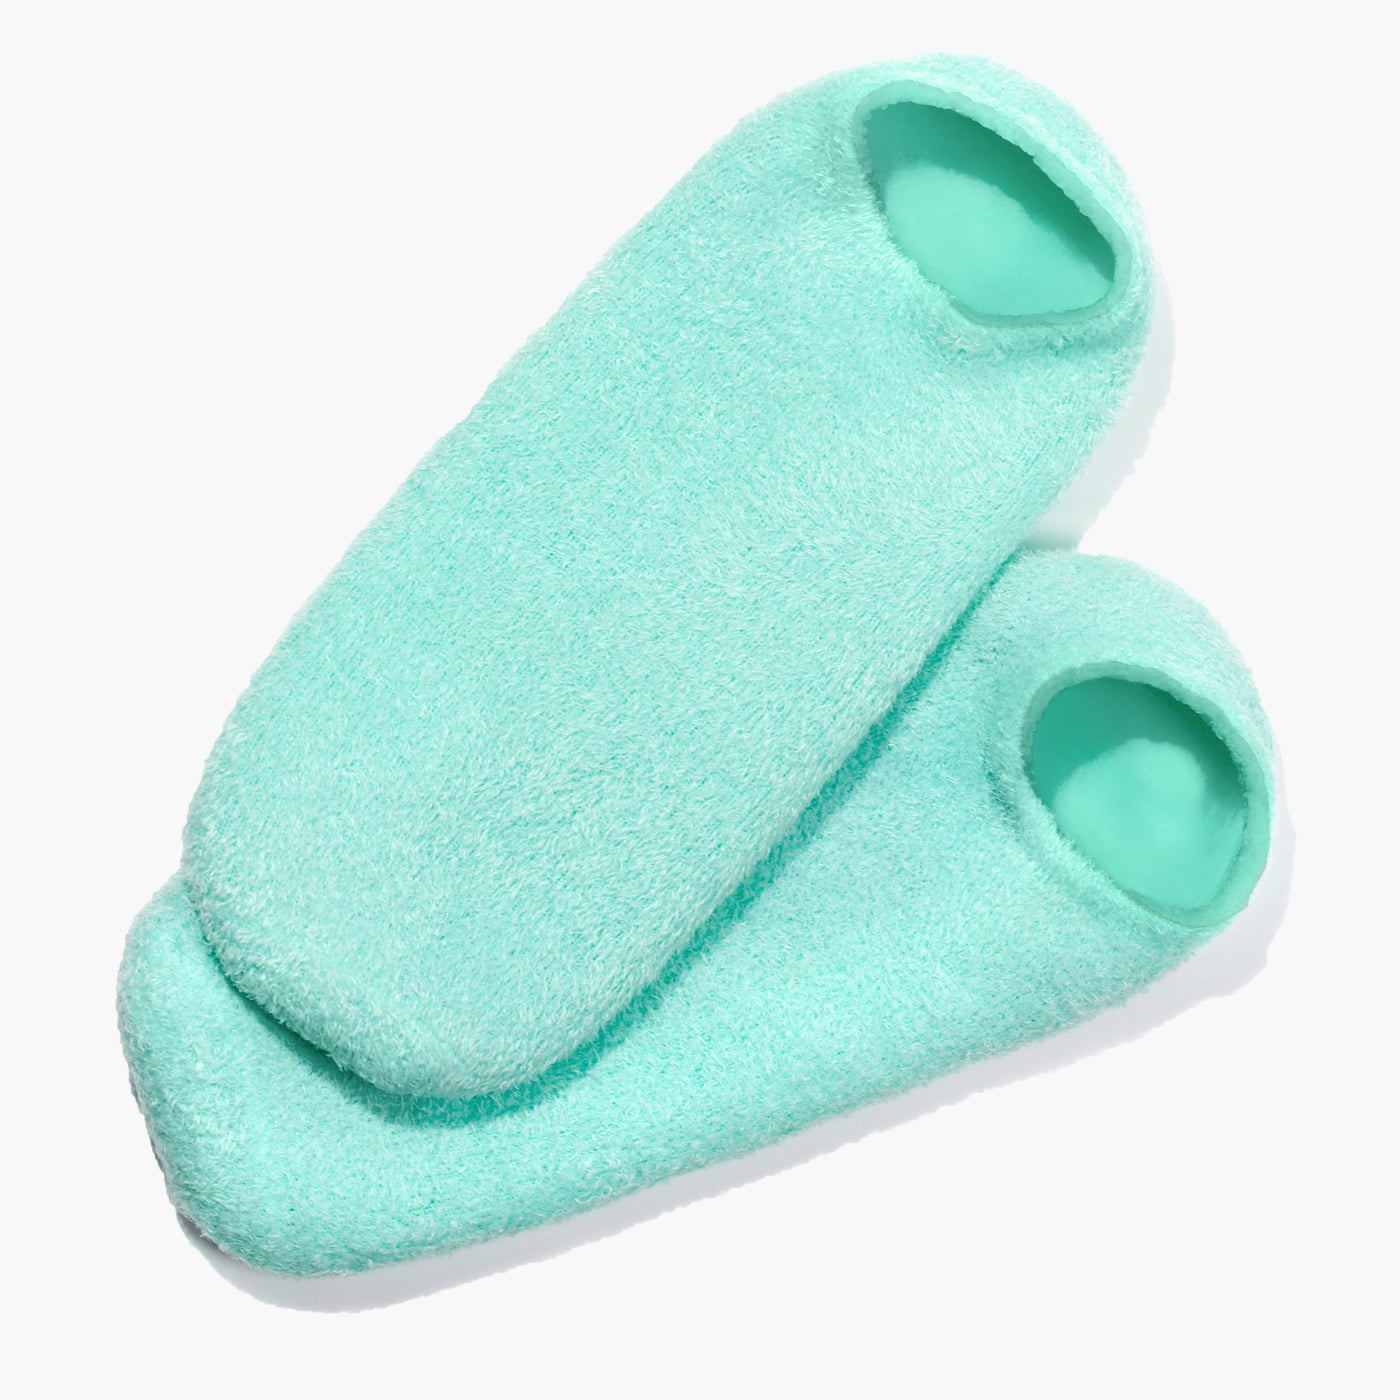 Pedi Perfect Moisturizing Spa Socks, Foot Care